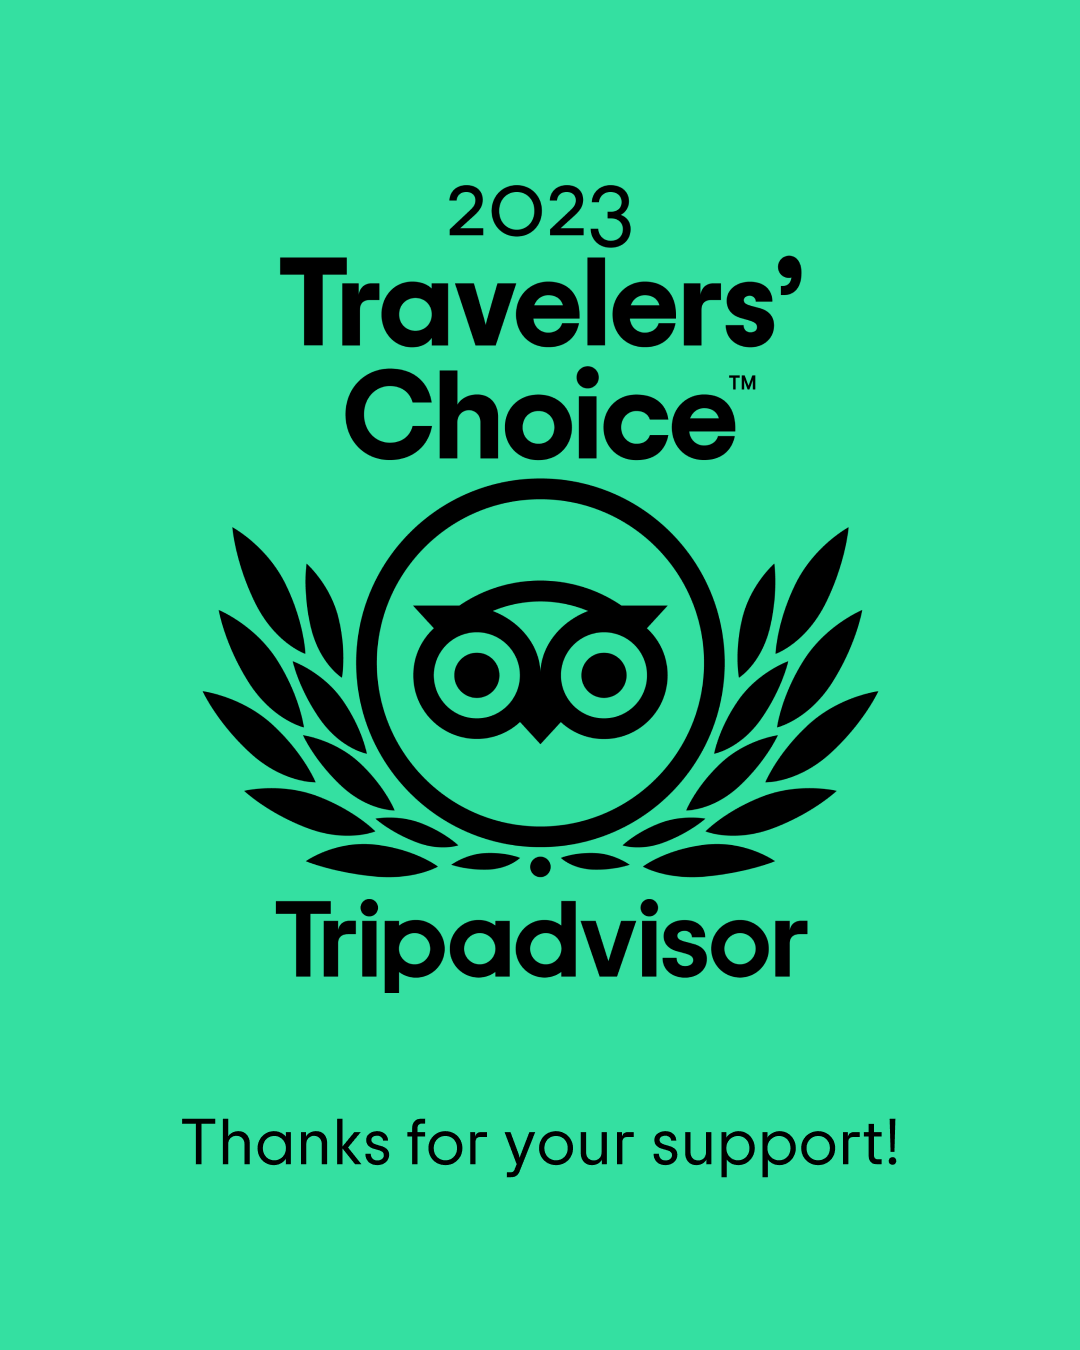 tripadvisor-travellers-choice-winner-2023